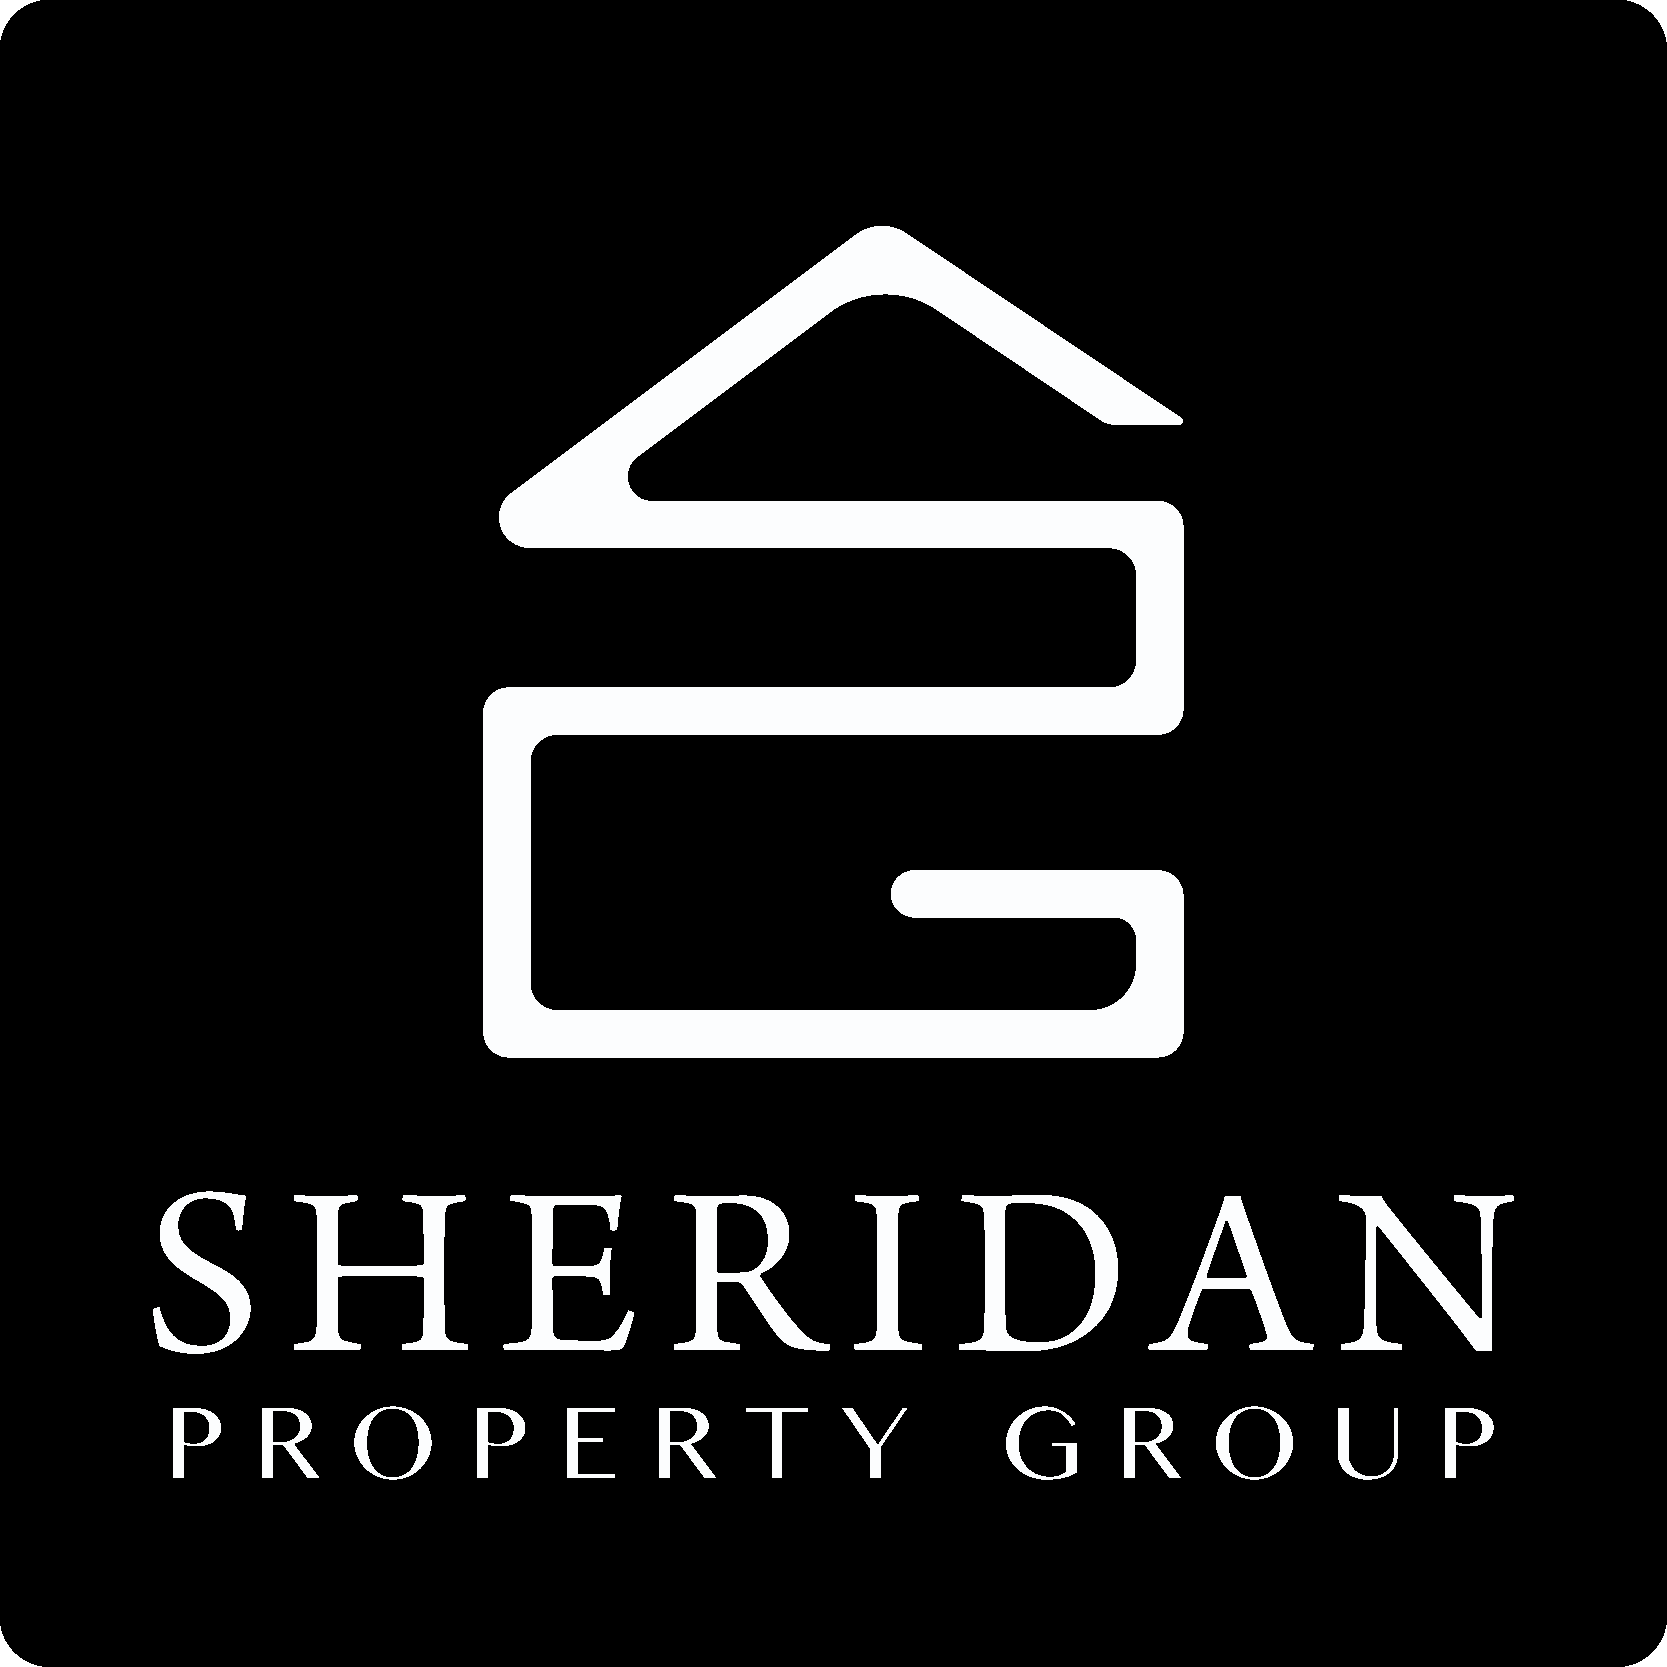 Sheridan Property Group